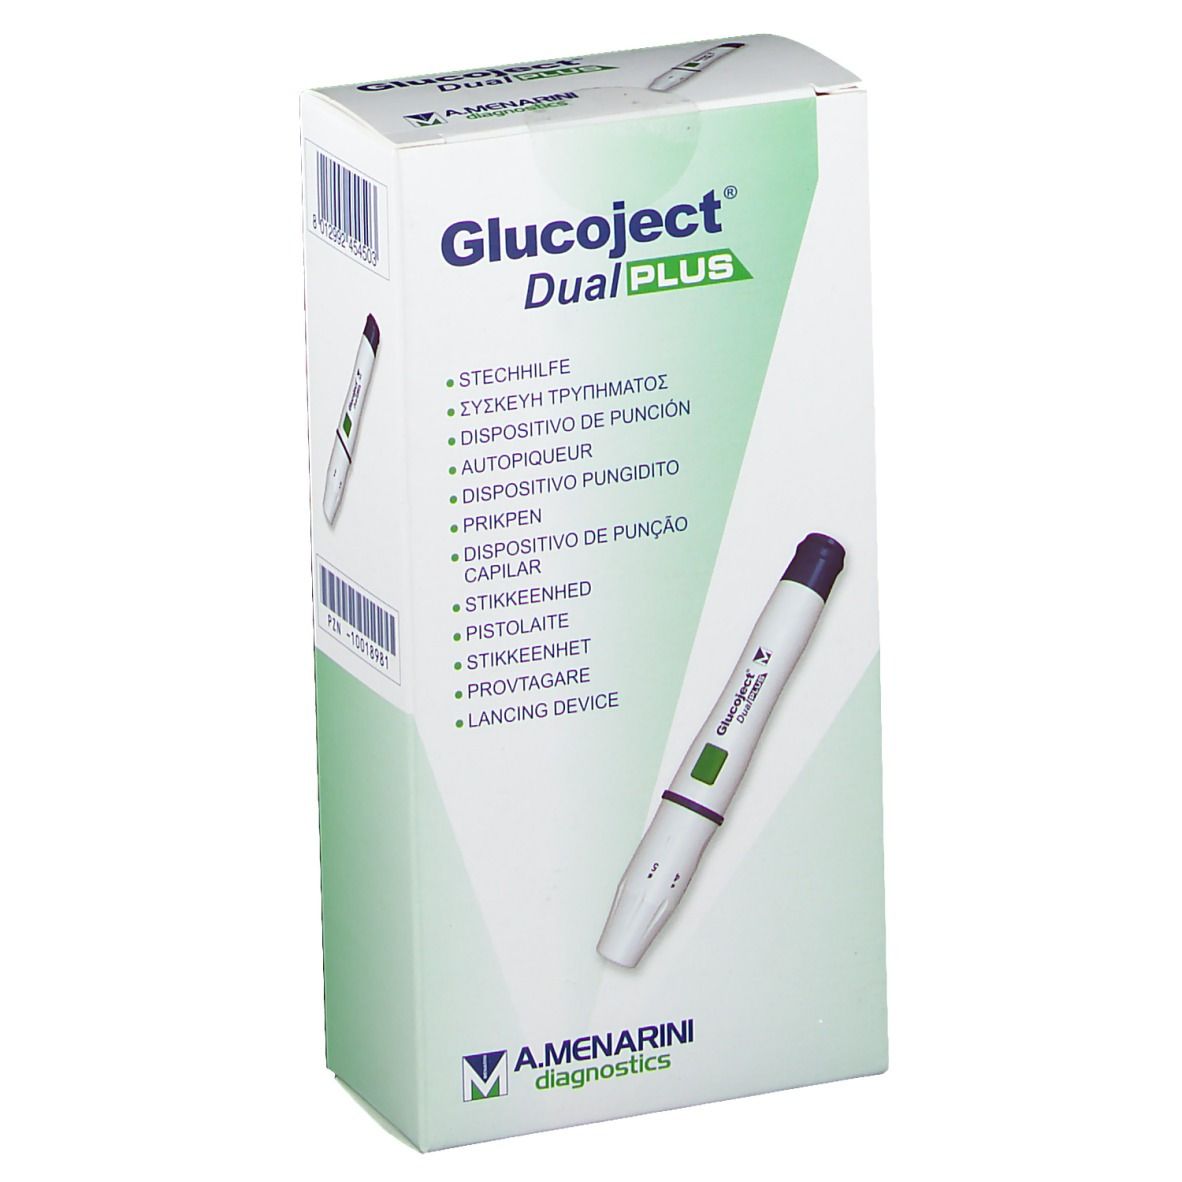 Glucoject® Dual Plus Autopiquer